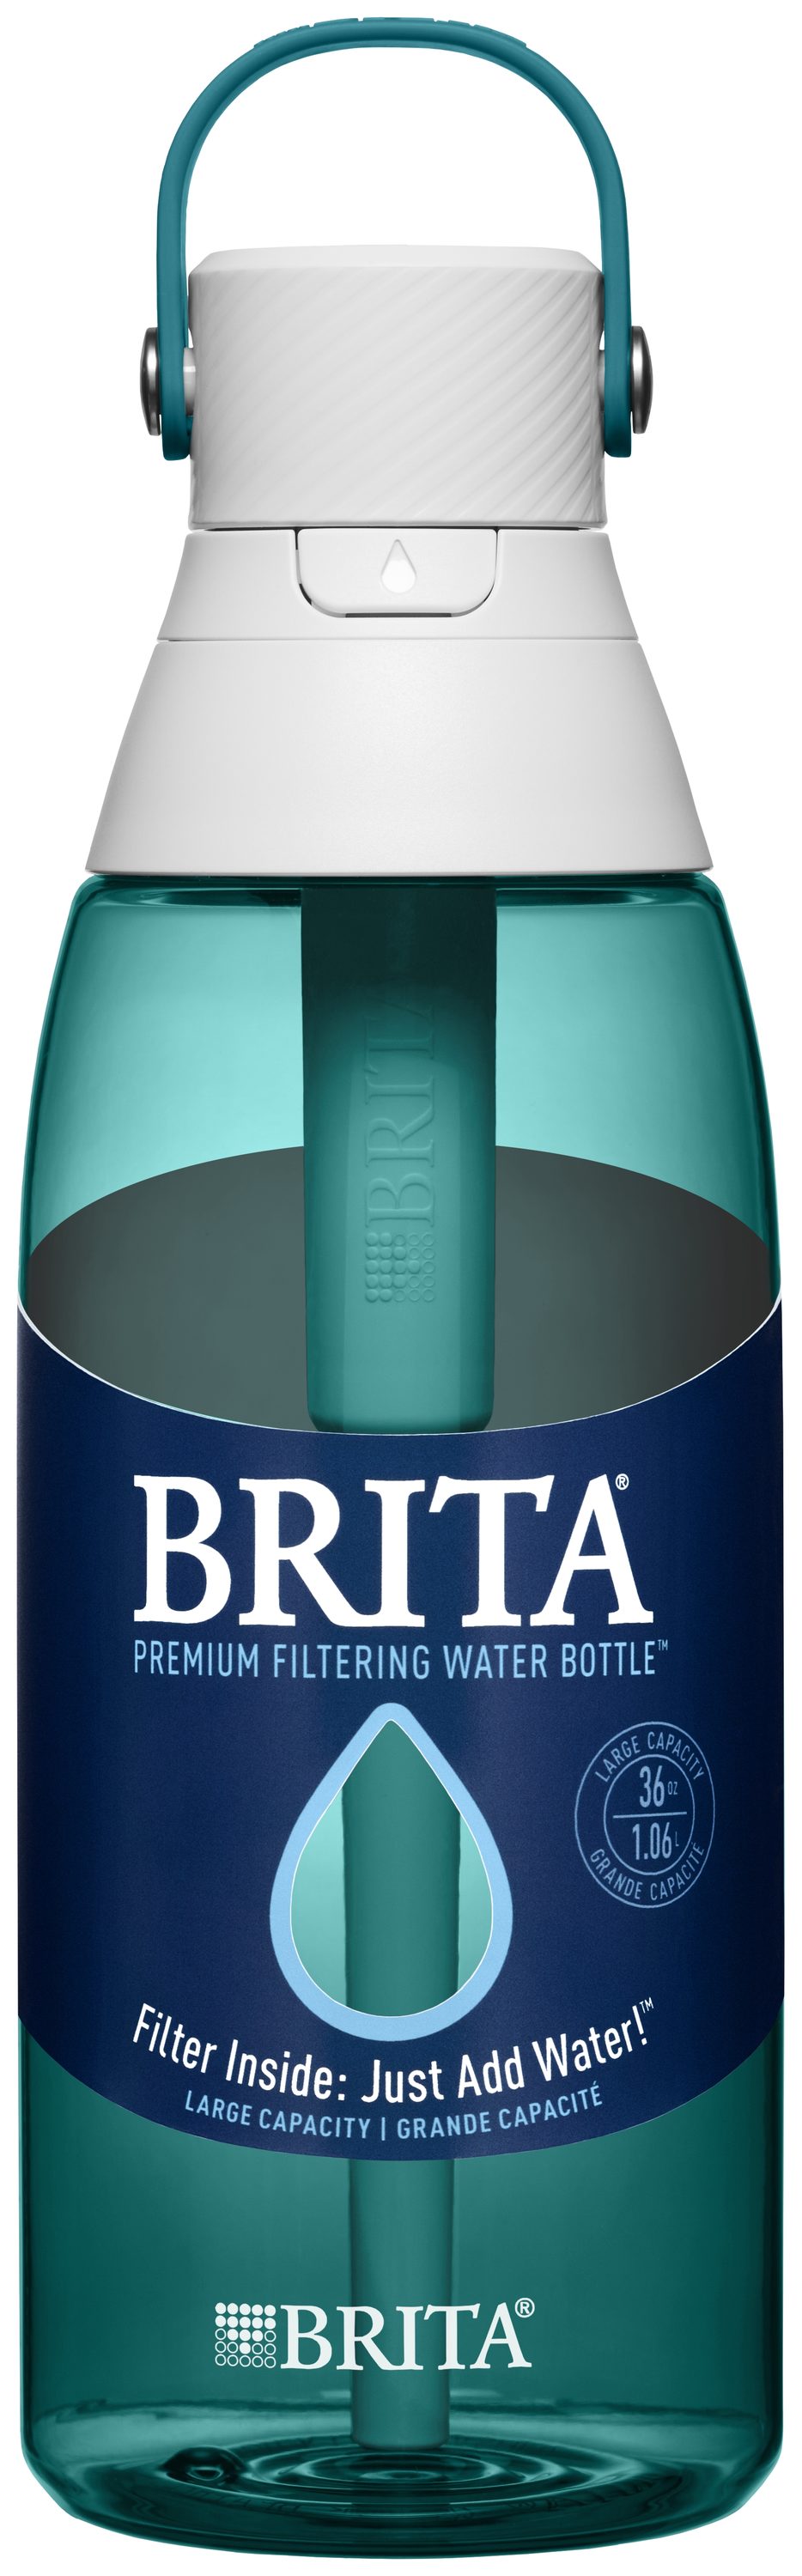 Brita Bottle with Water Filter 36-fl oz Plastic Water Bottle in